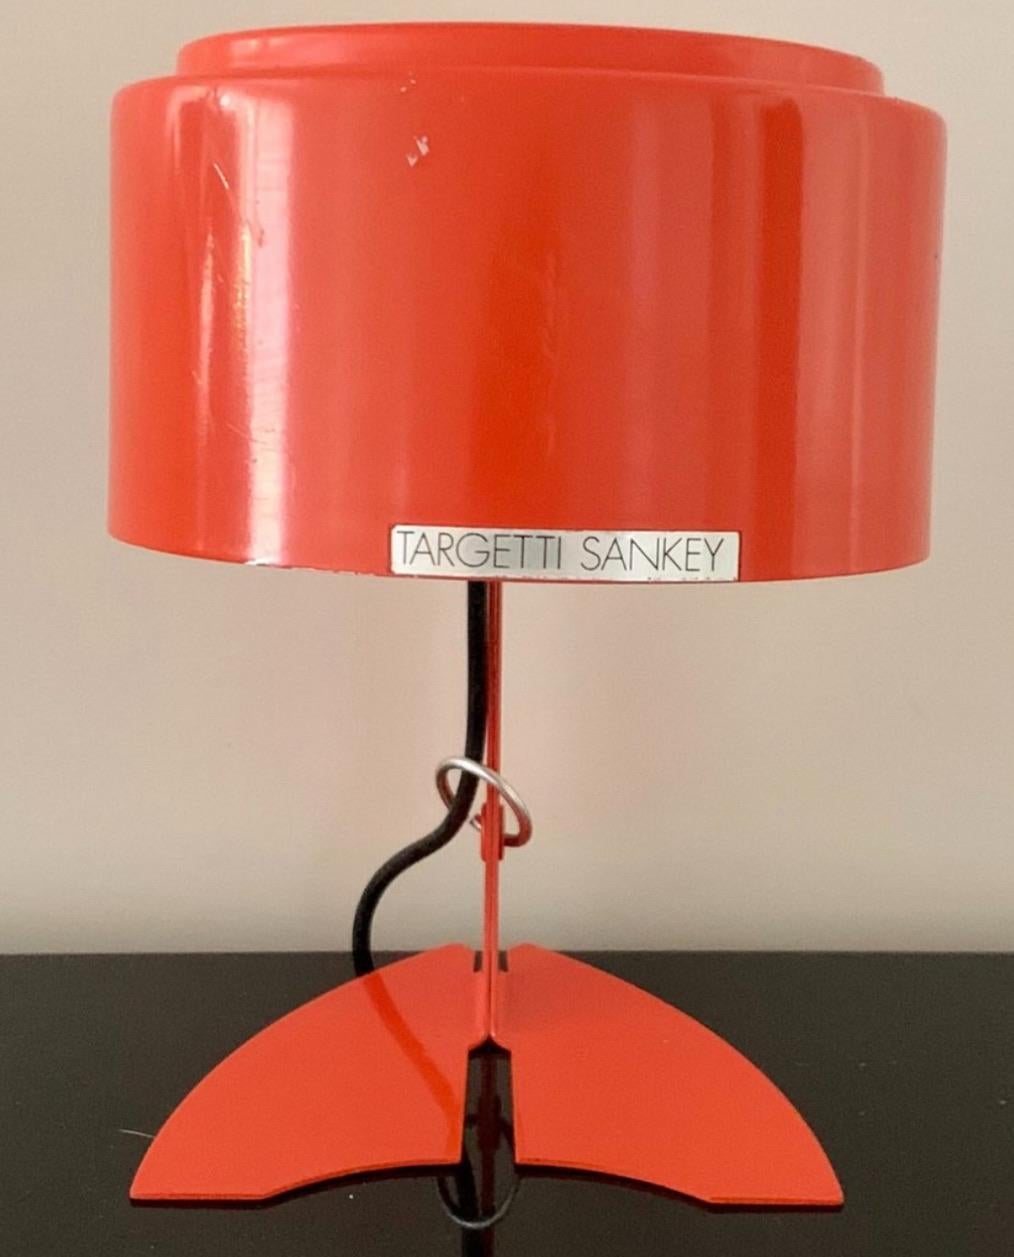 Iconic Pair of Targetti Sankey Table Lamps - Avantgarde Italian Lighting 70s For Sale 5